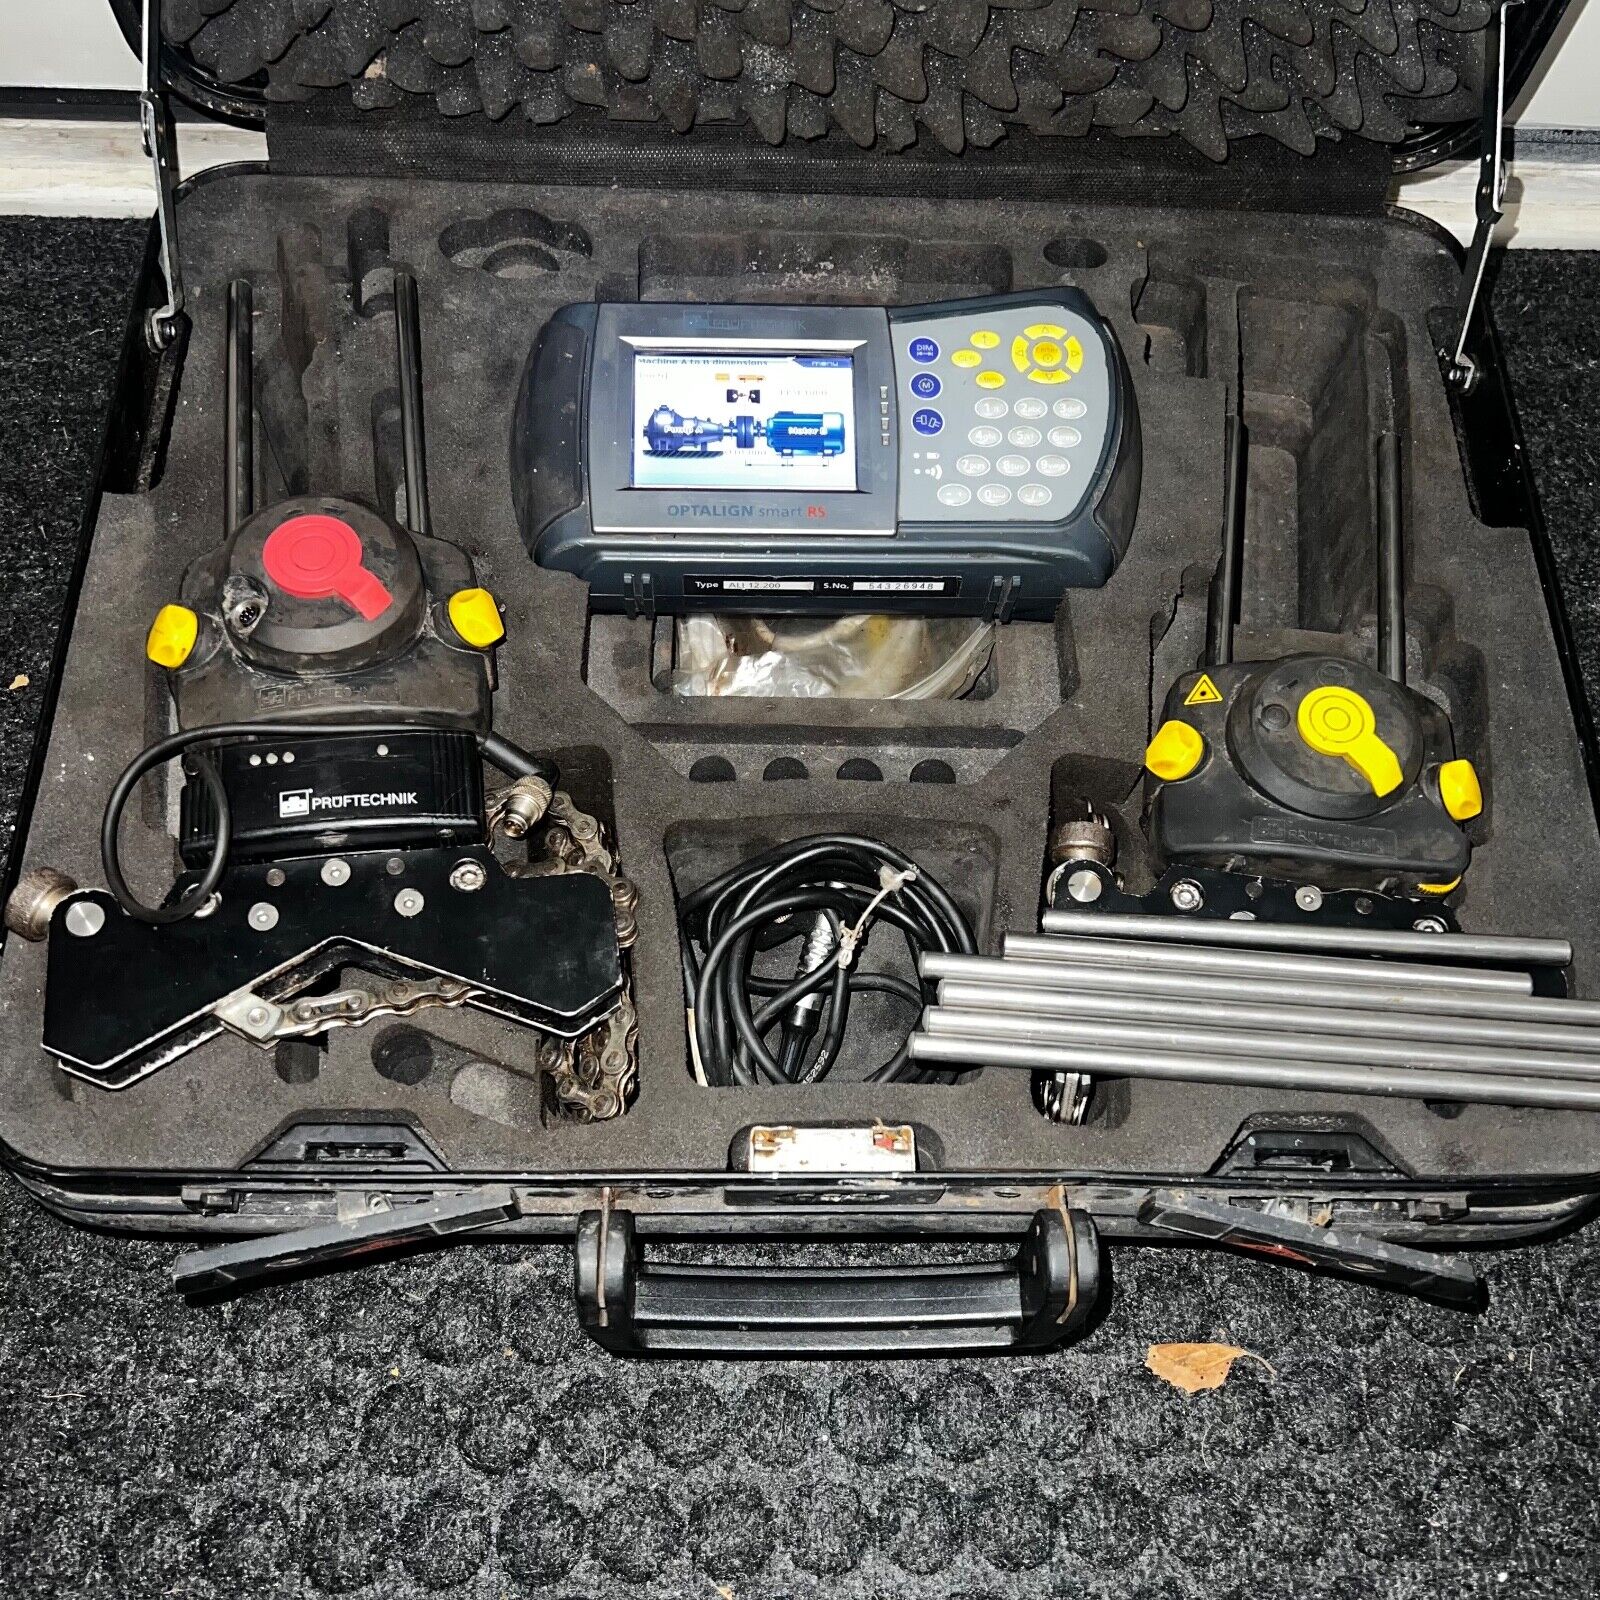 PRUFTECHNIK ALI12200 Laser Alignment Tool for sale online